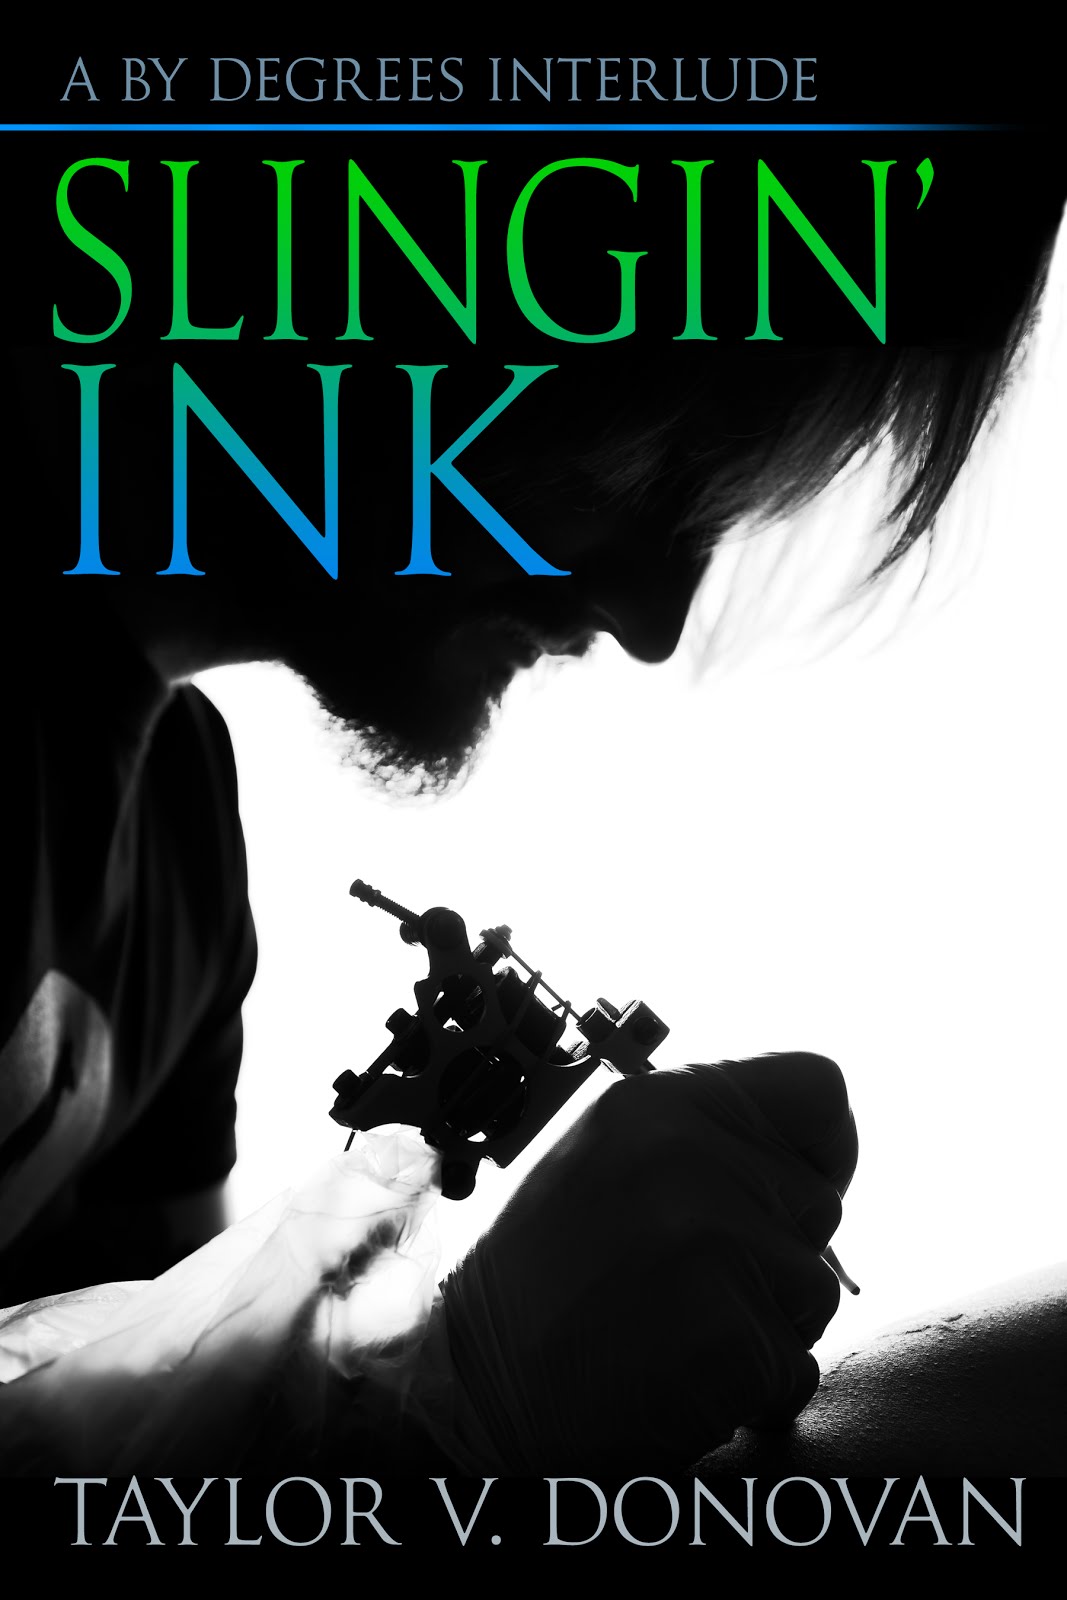 Slingin' Ink by Taylor V. Donovan